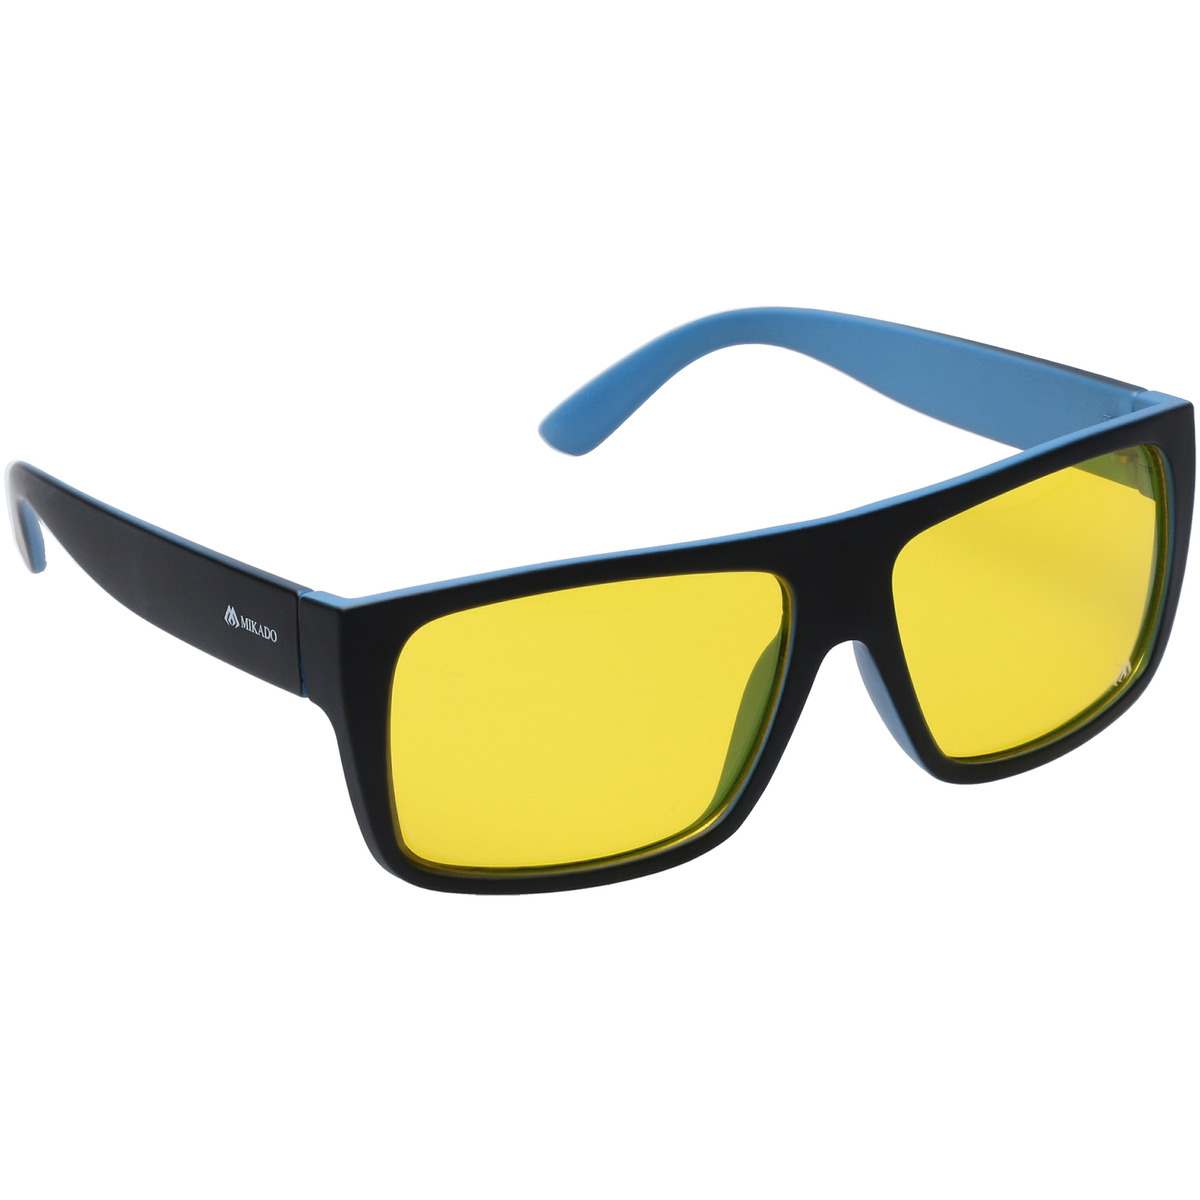 Mikado Sunglasses Polarized - 595 YELLOW